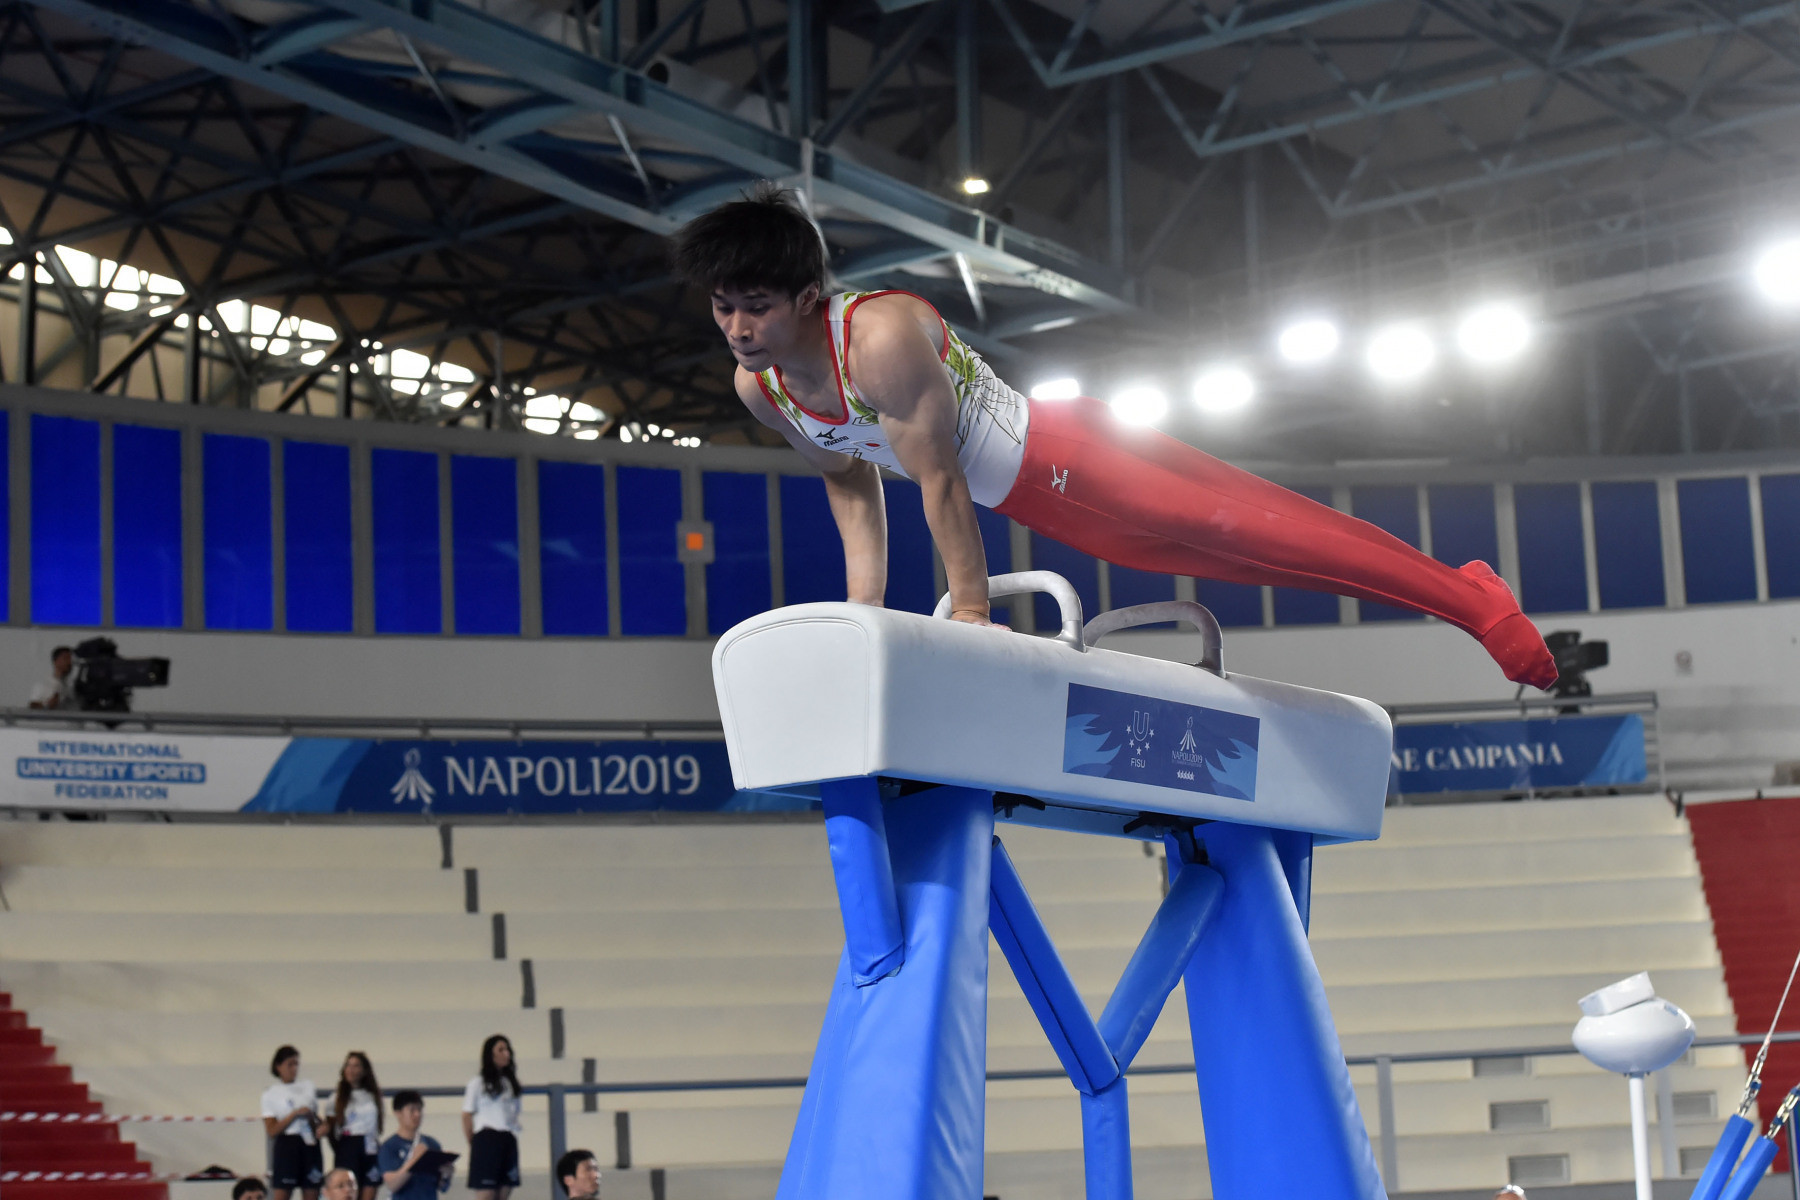 Artistic gymnastics began at the Naples 2019 Summer Universiade ©Naples 2019